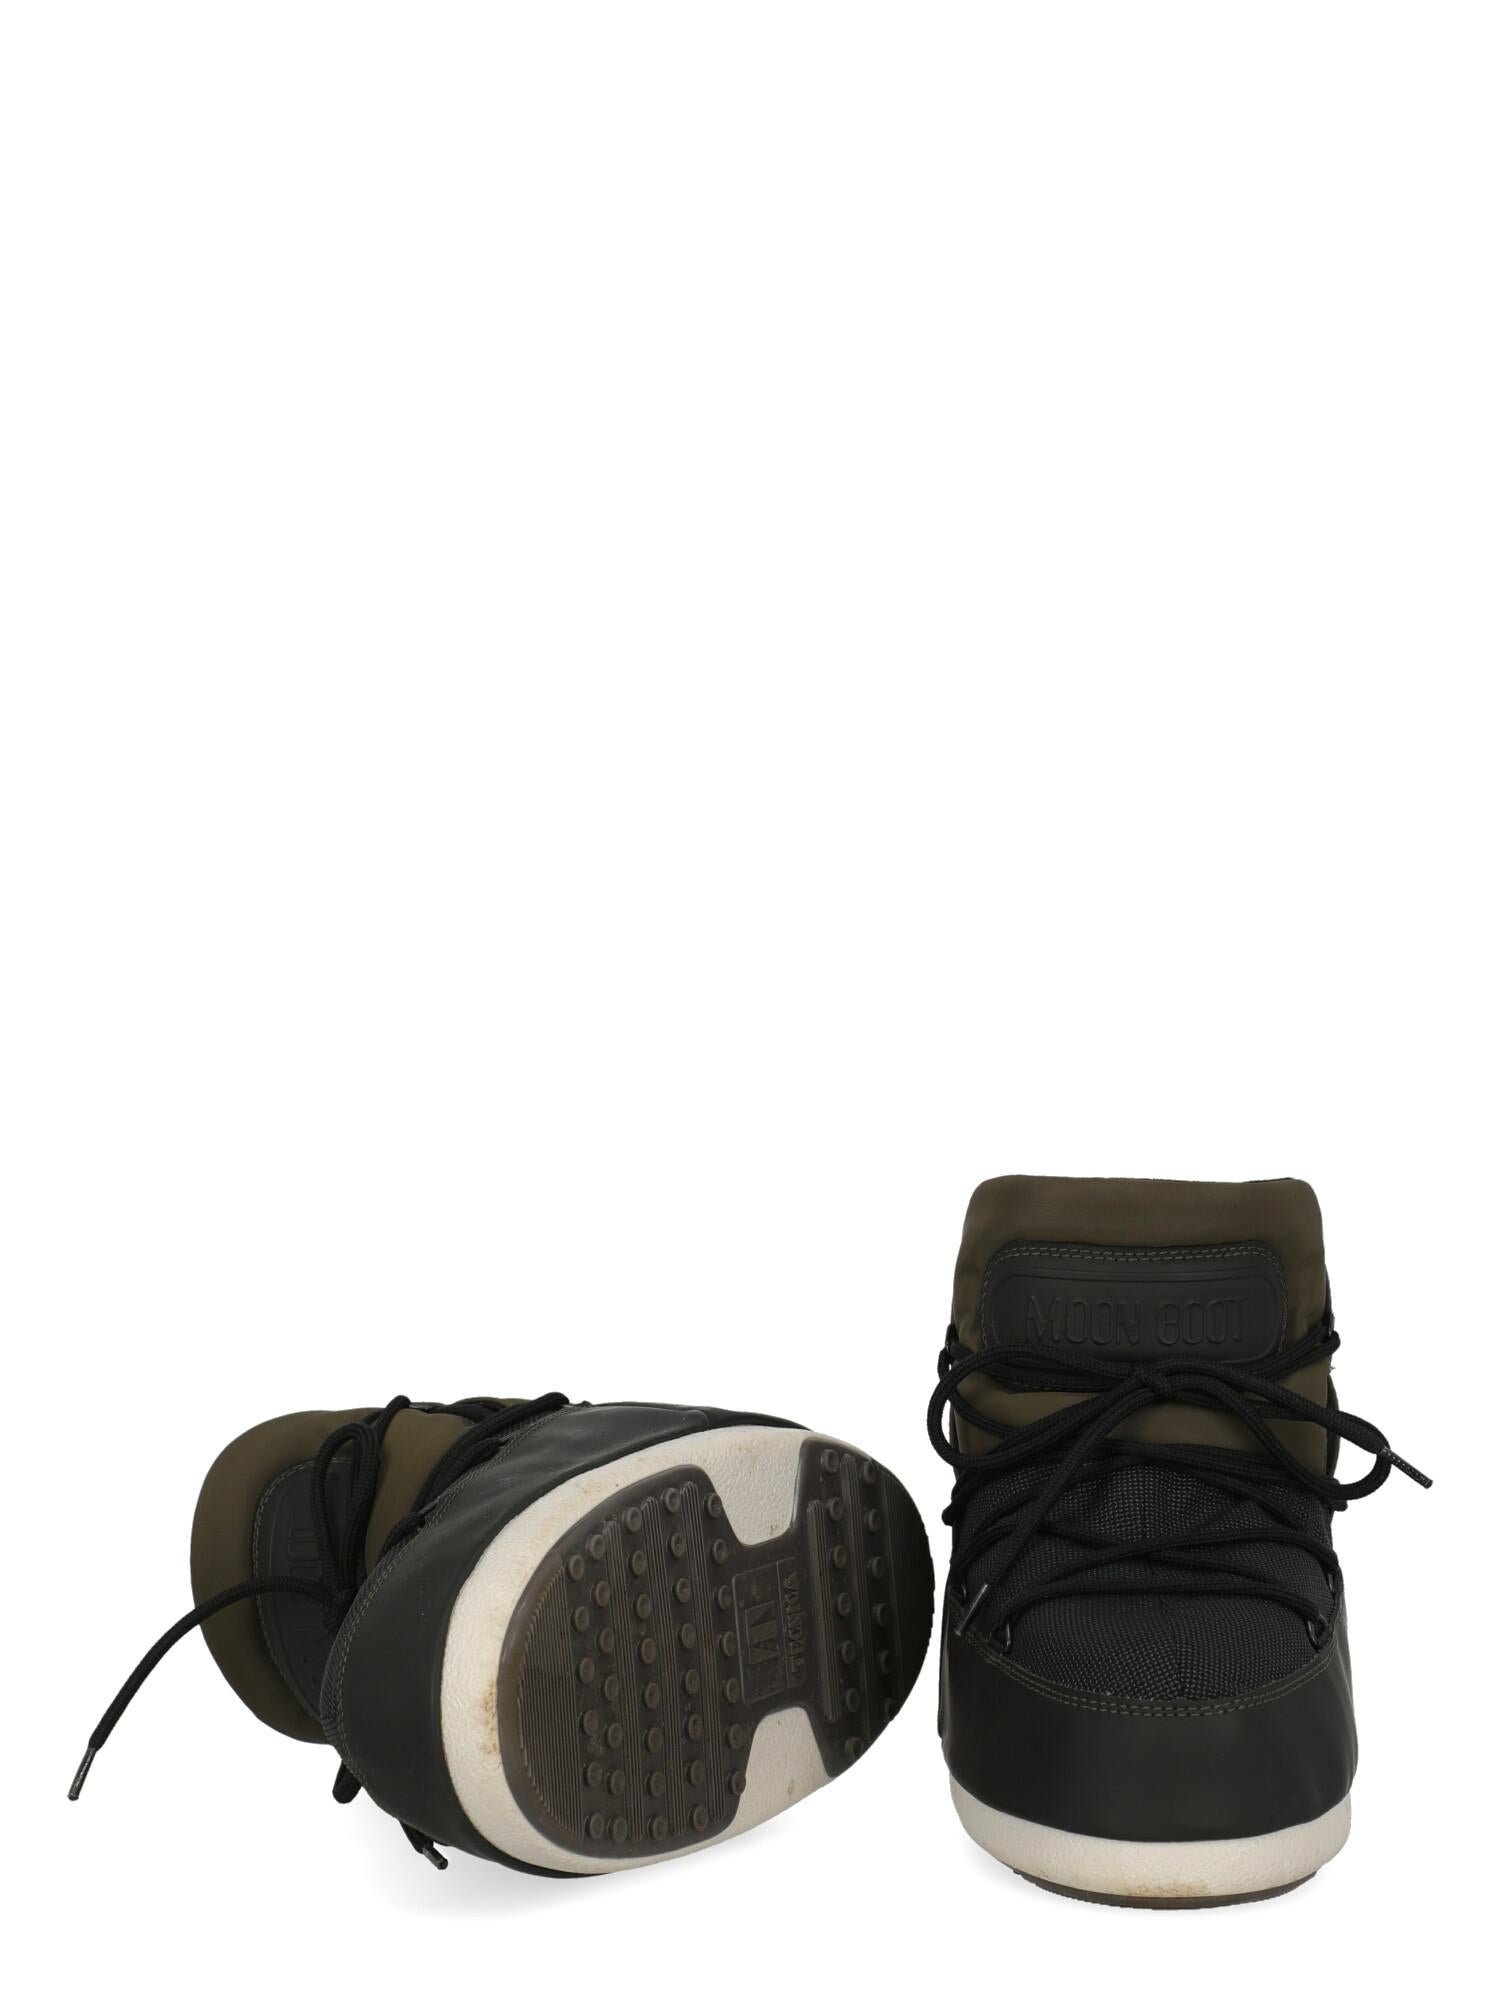 Women's Moon Boot Women Ankle boots Black, Khaki Synthetic Fibers EU 38 For Sale